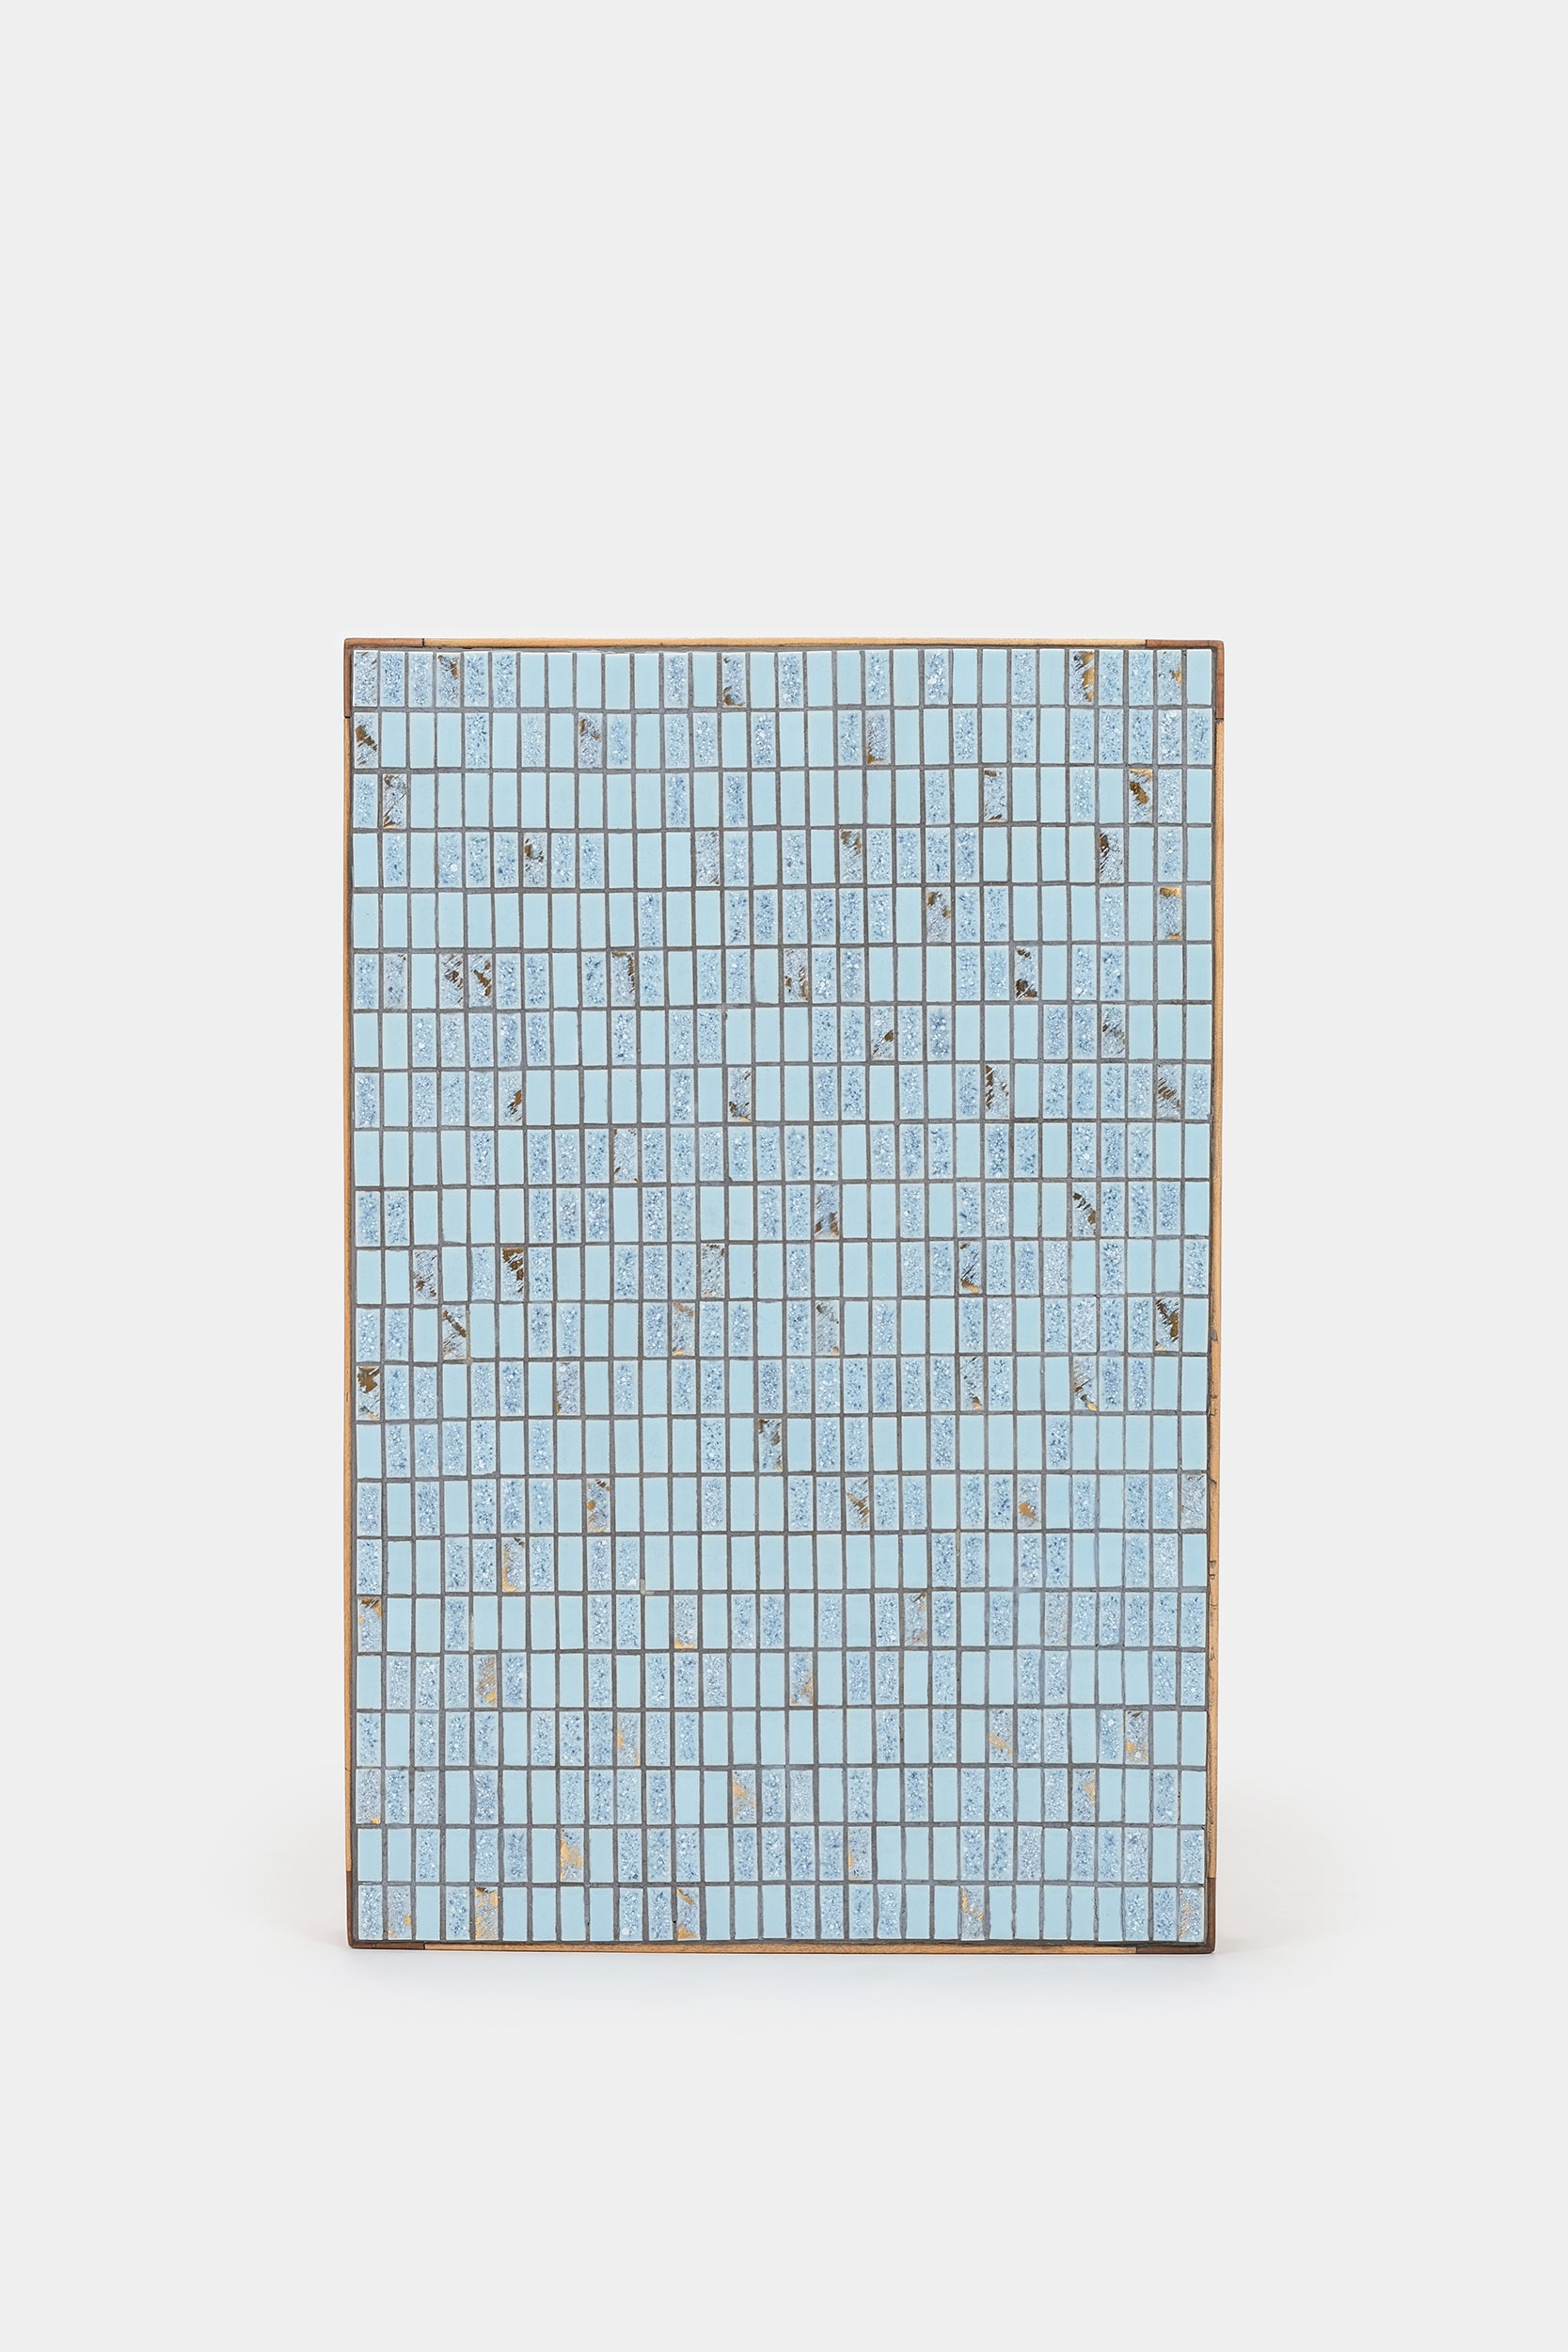 Mosaic Table, Switzerland, 40s